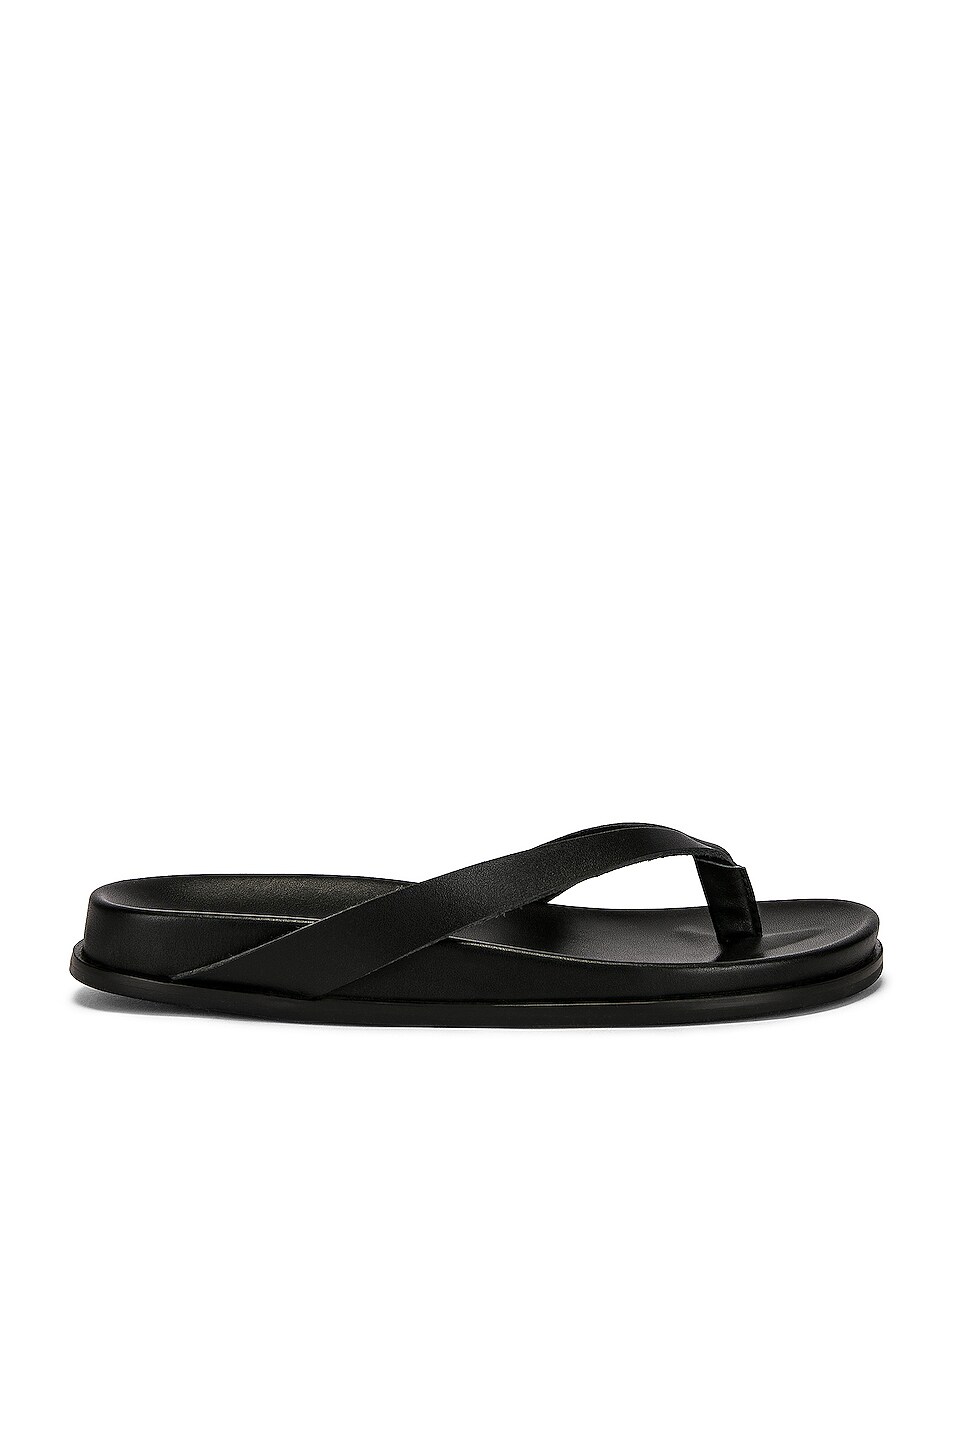 St. Agni Flip Flop Sandal in Black | FWRD